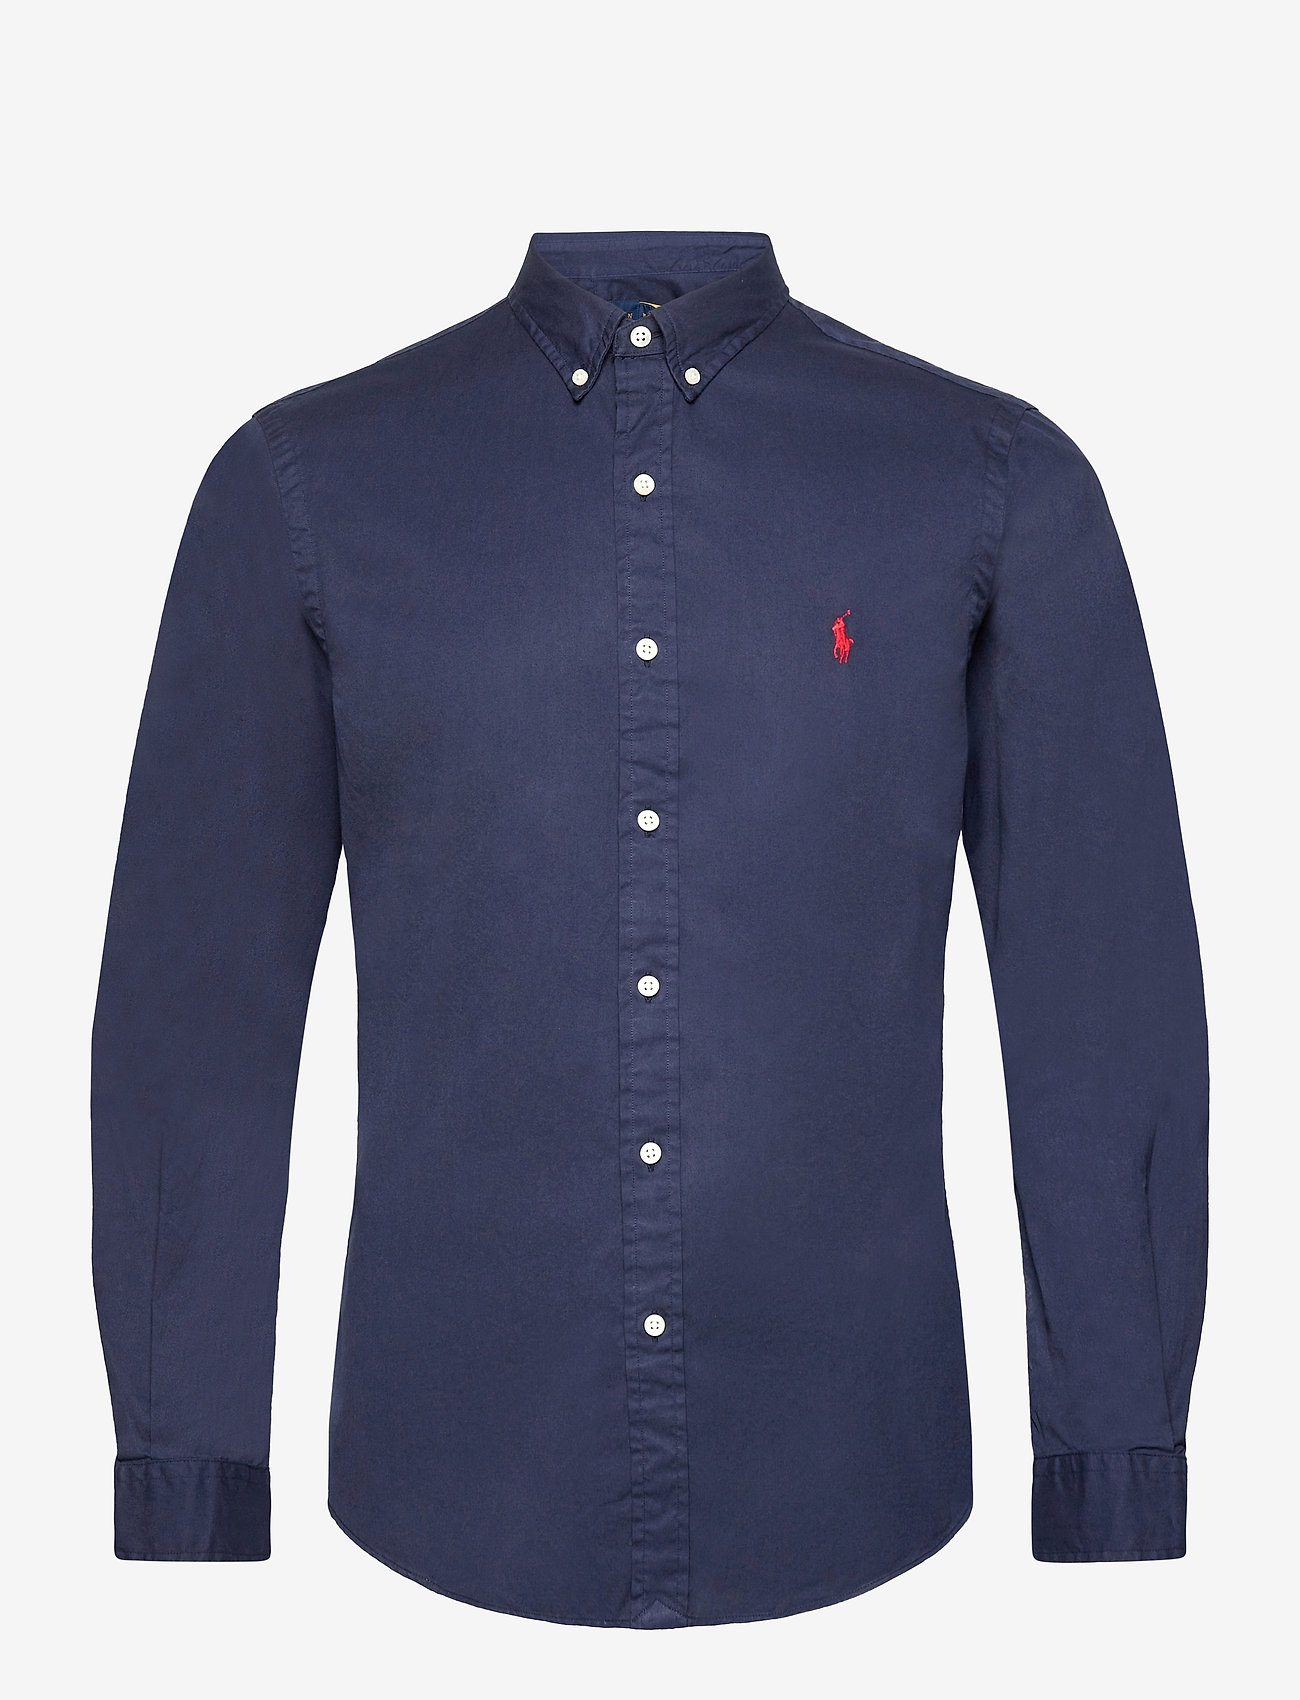 Polo Ralph Lauren Slim Fit Garment-dyed Twill Shirt (Cruise Navy) - 999